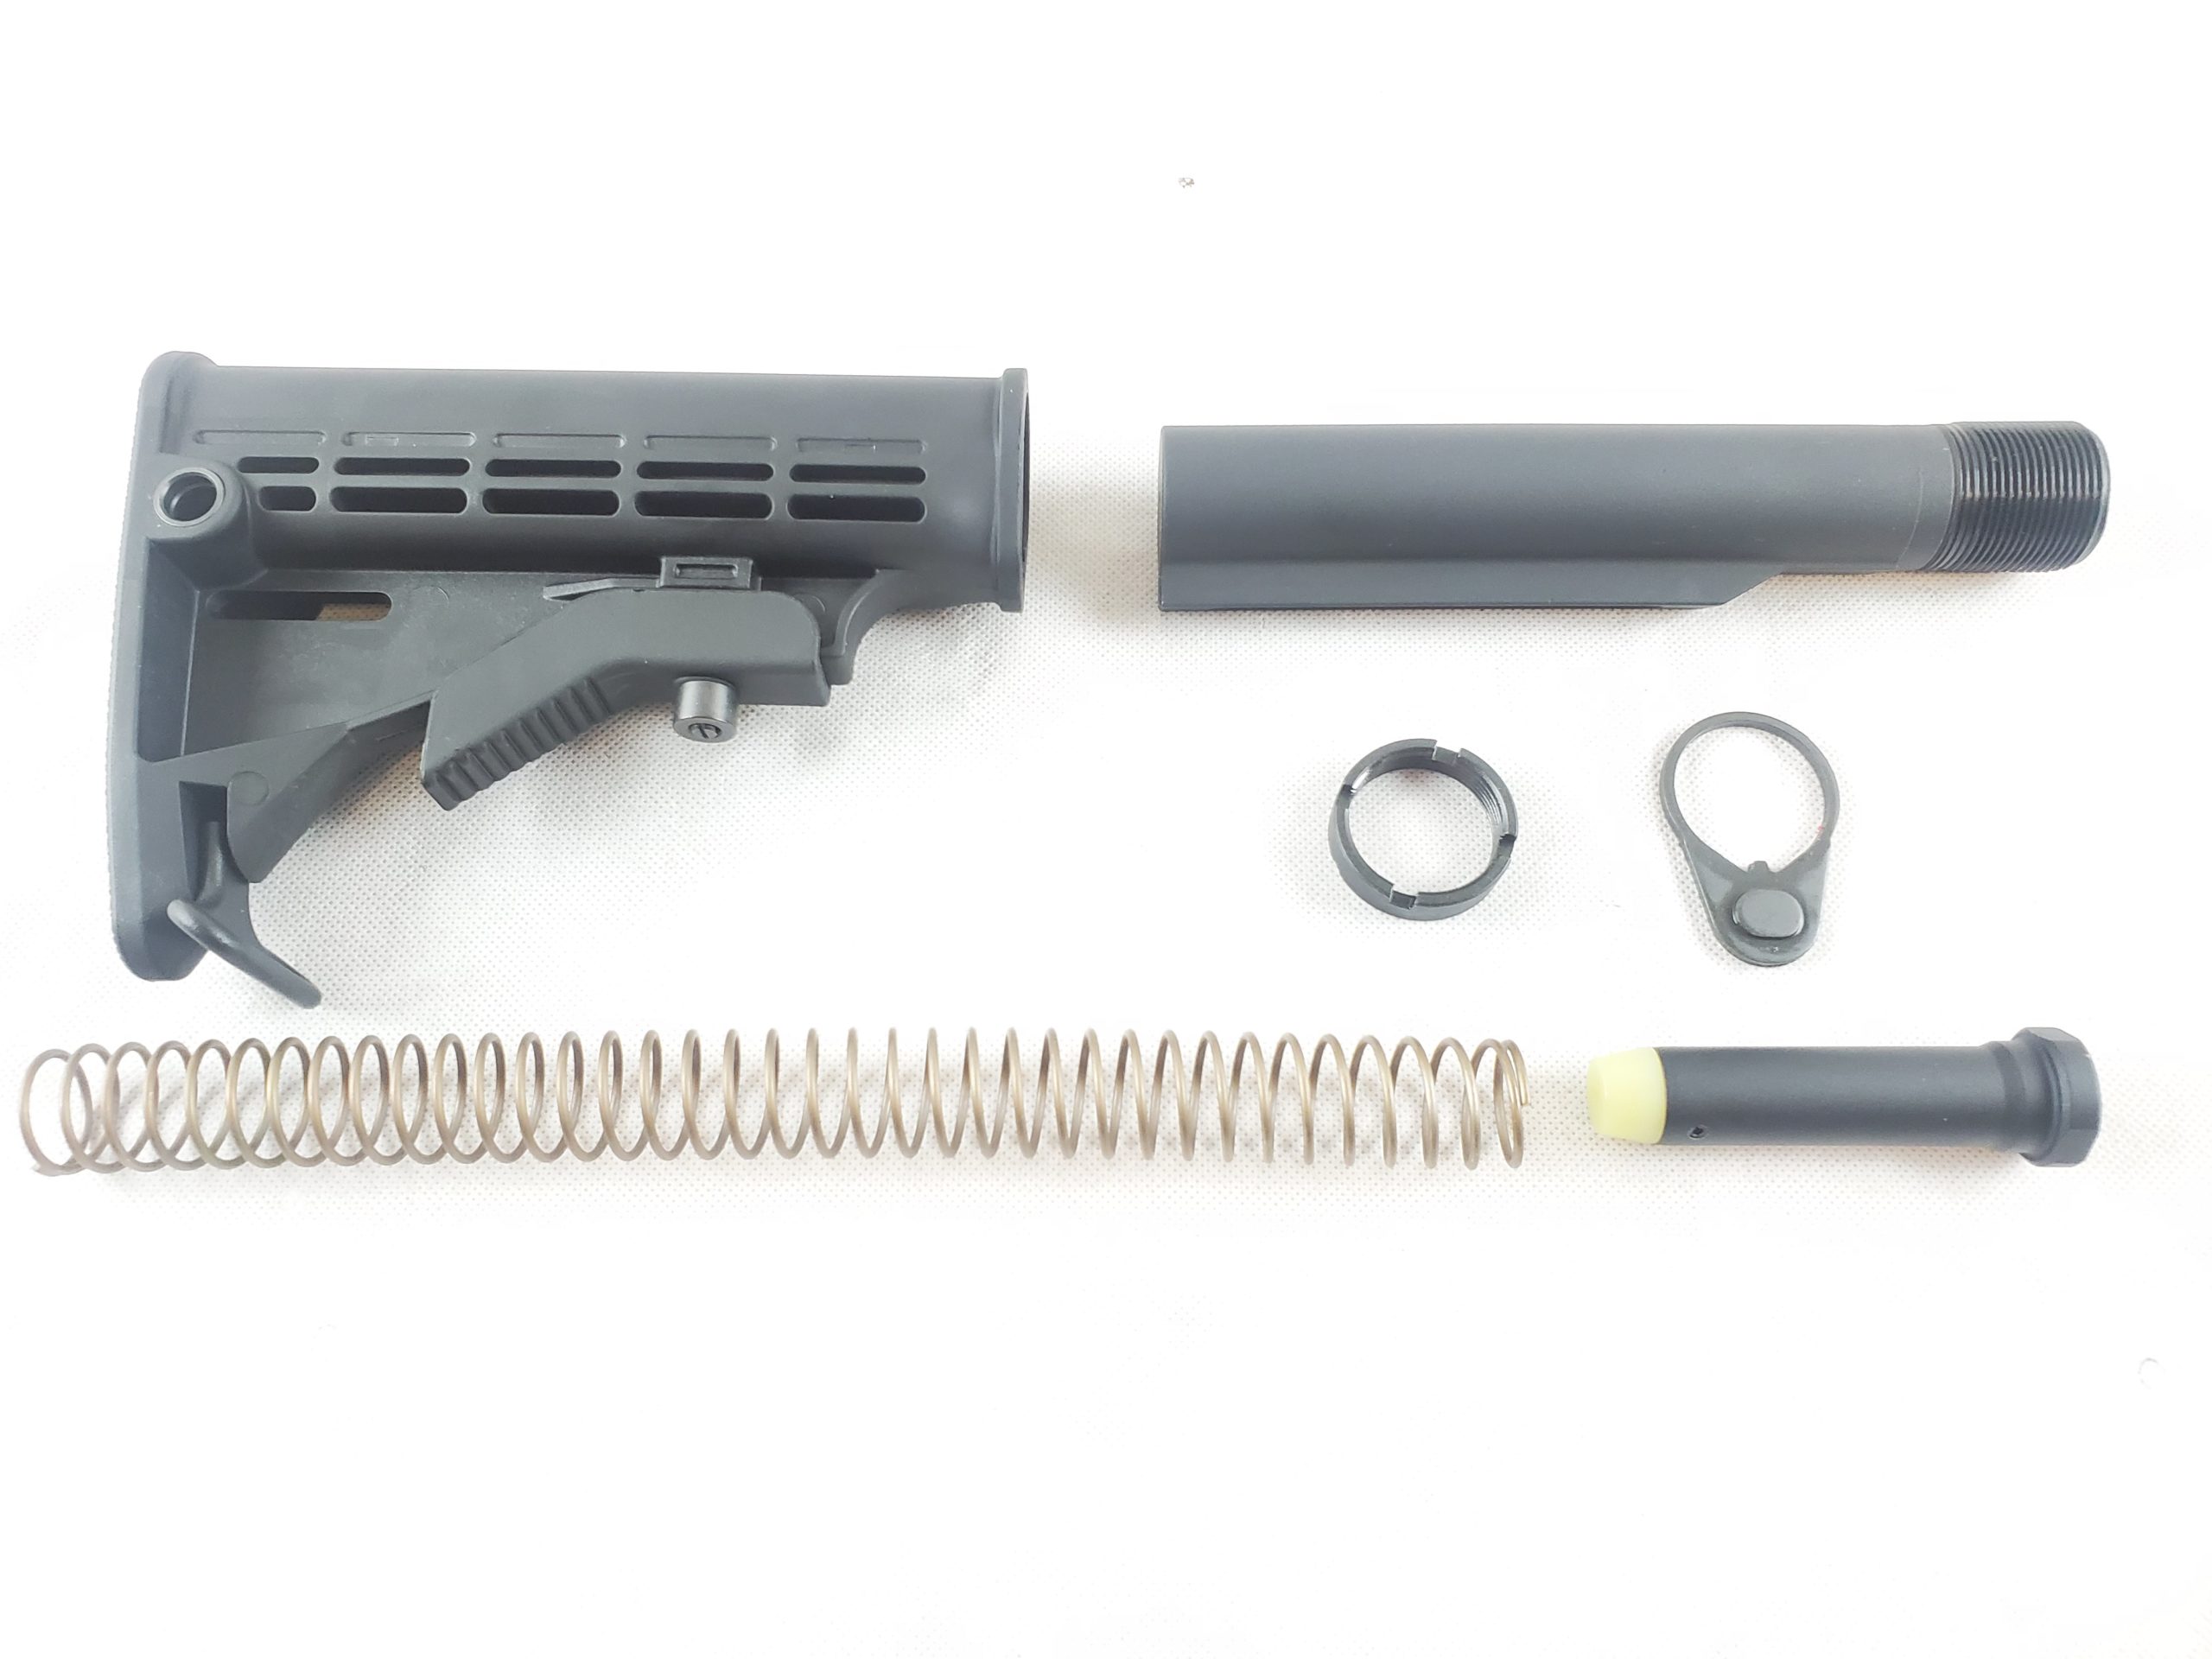 AR-15 Carbine milspec stock kit. 